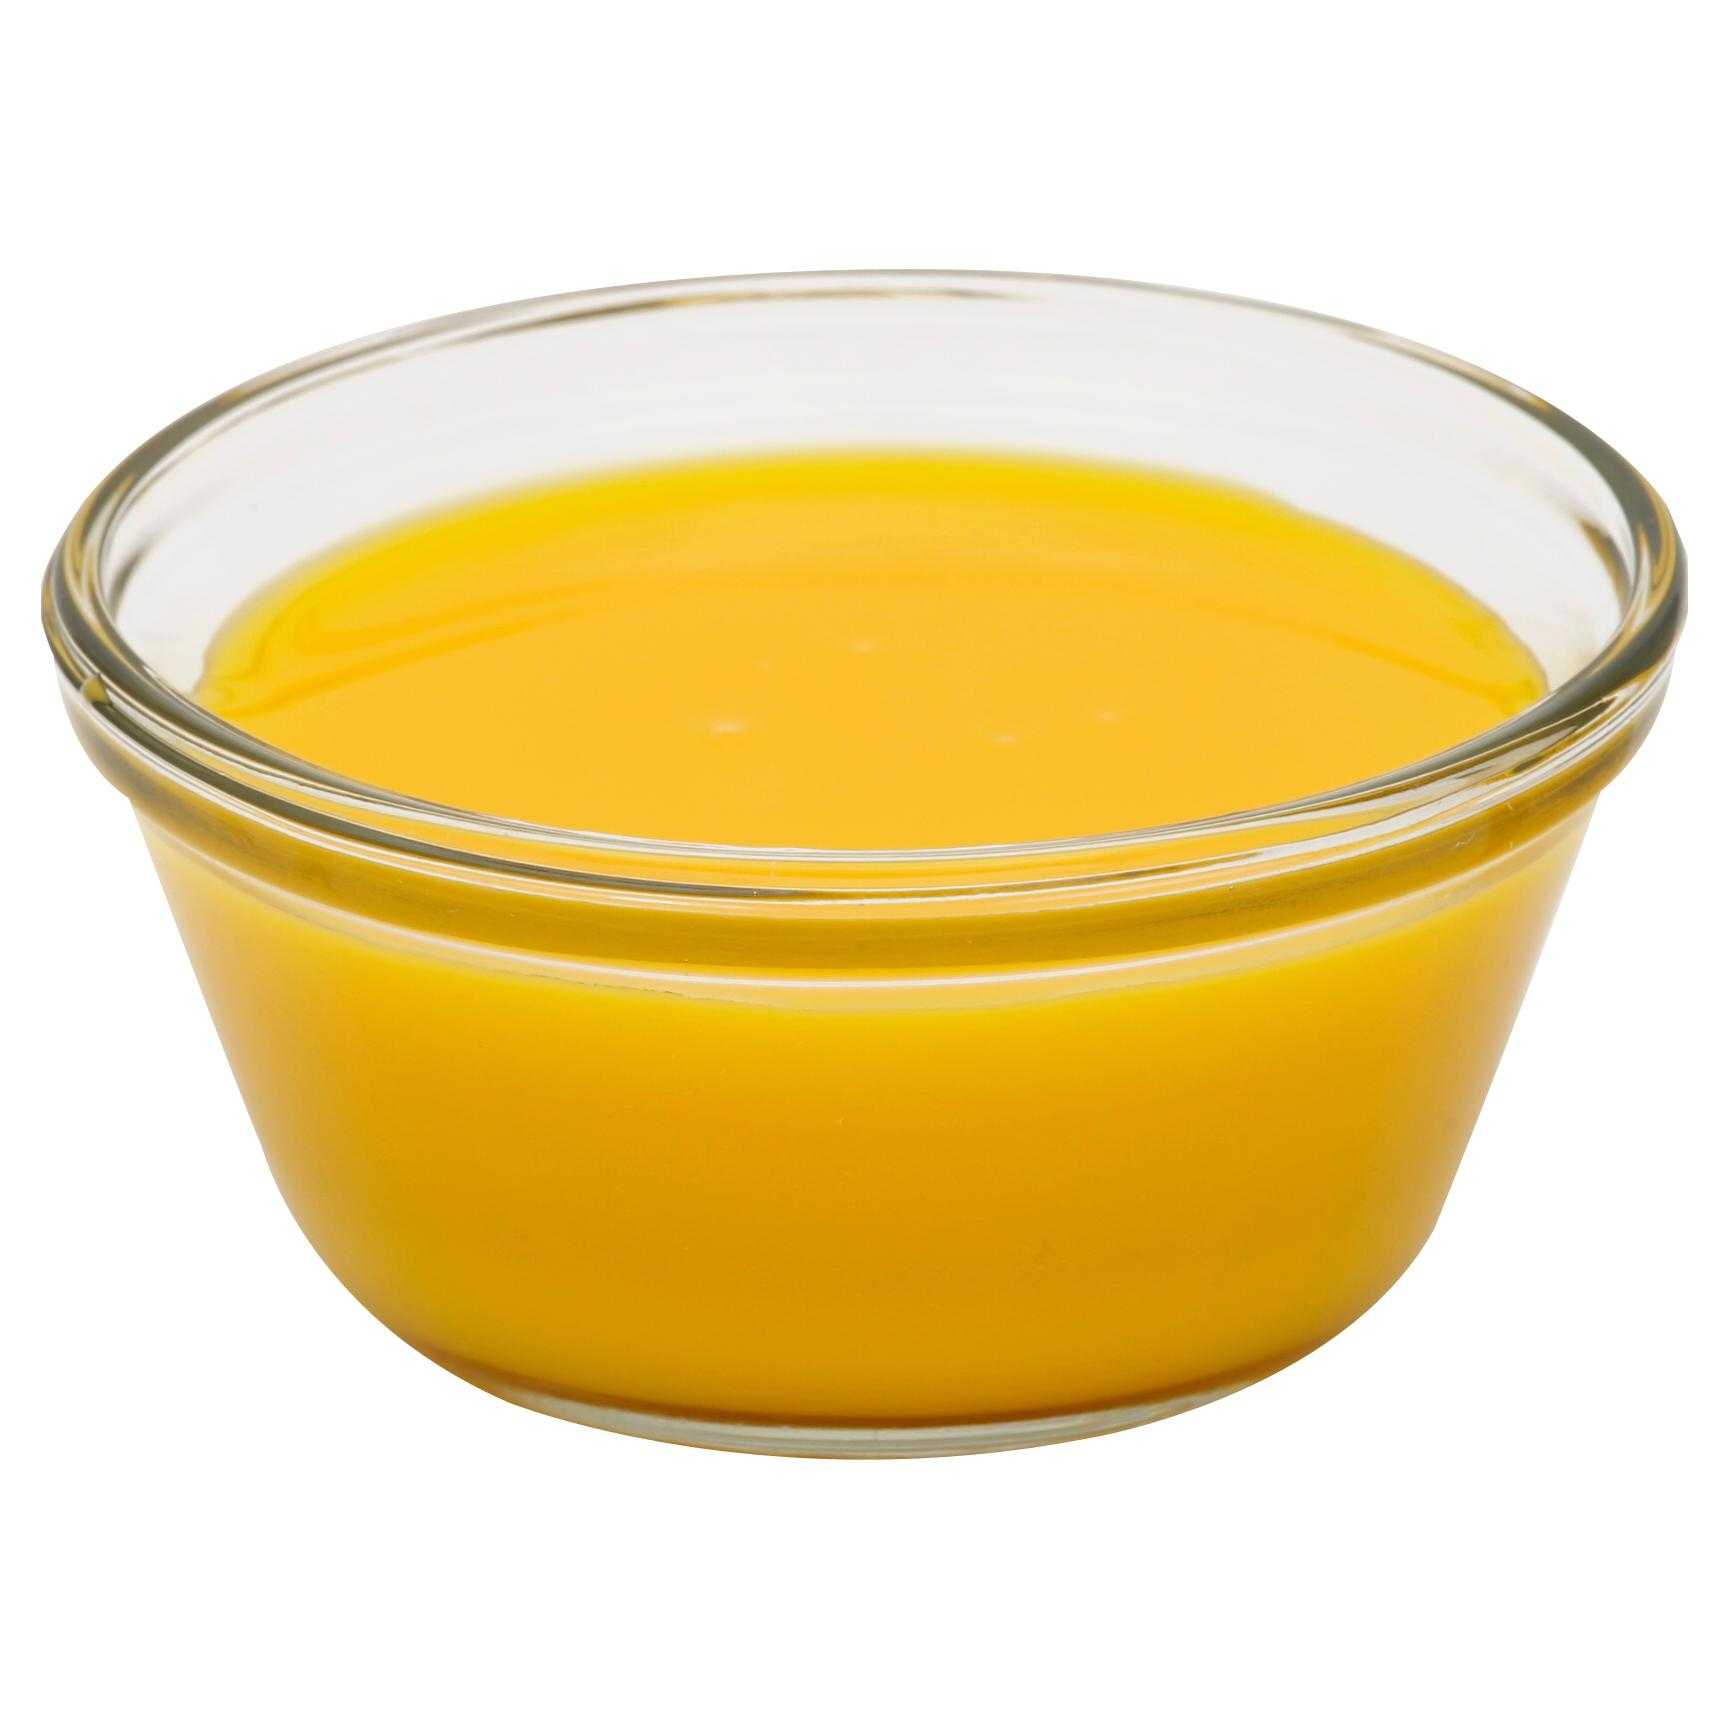 Papetti’s® Frozen Liquid 10KR Emulsa® Enzyme Modified Egg Product with 10% salt, 1/30 Lb Square Tub